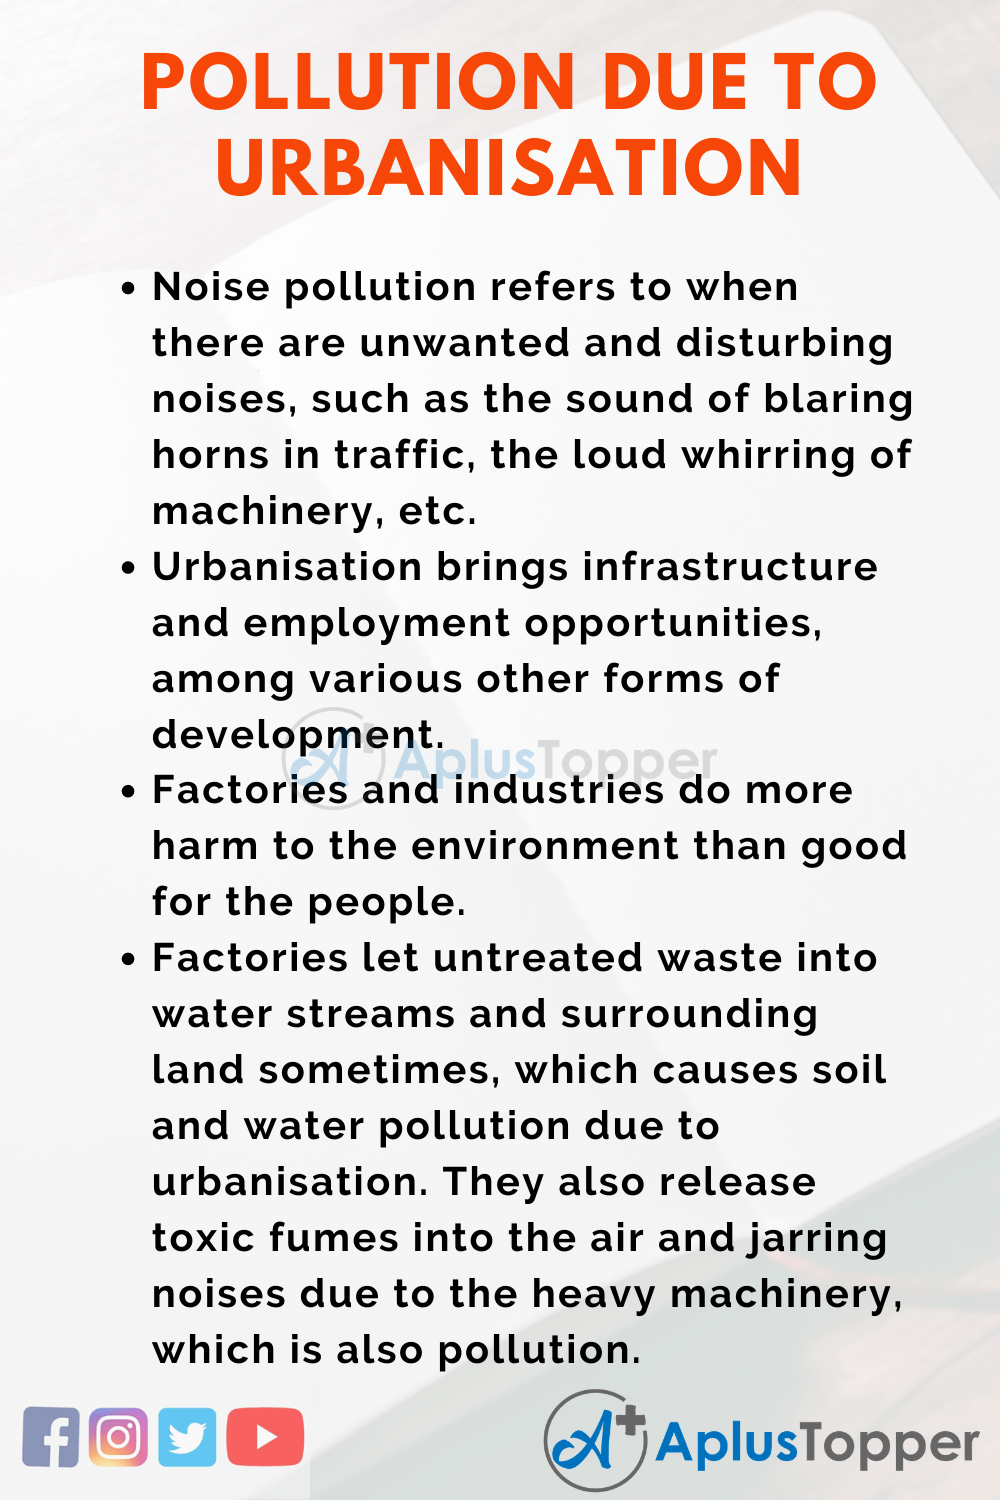 essay on pollution in urban areas